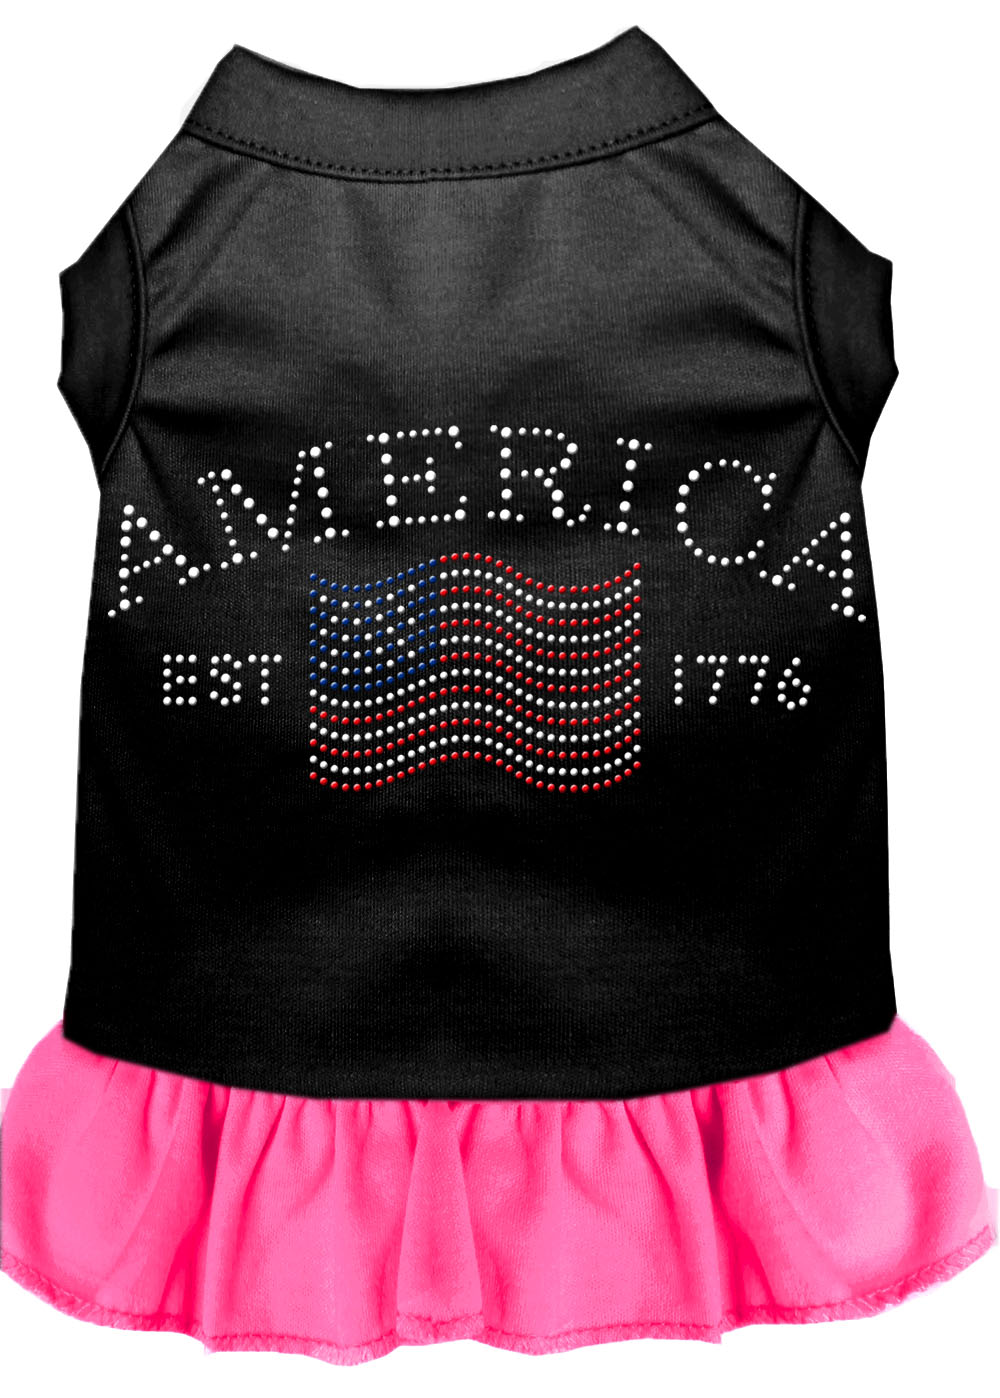 Classic America Rhinestone Dress Black with Bright Pink XXL